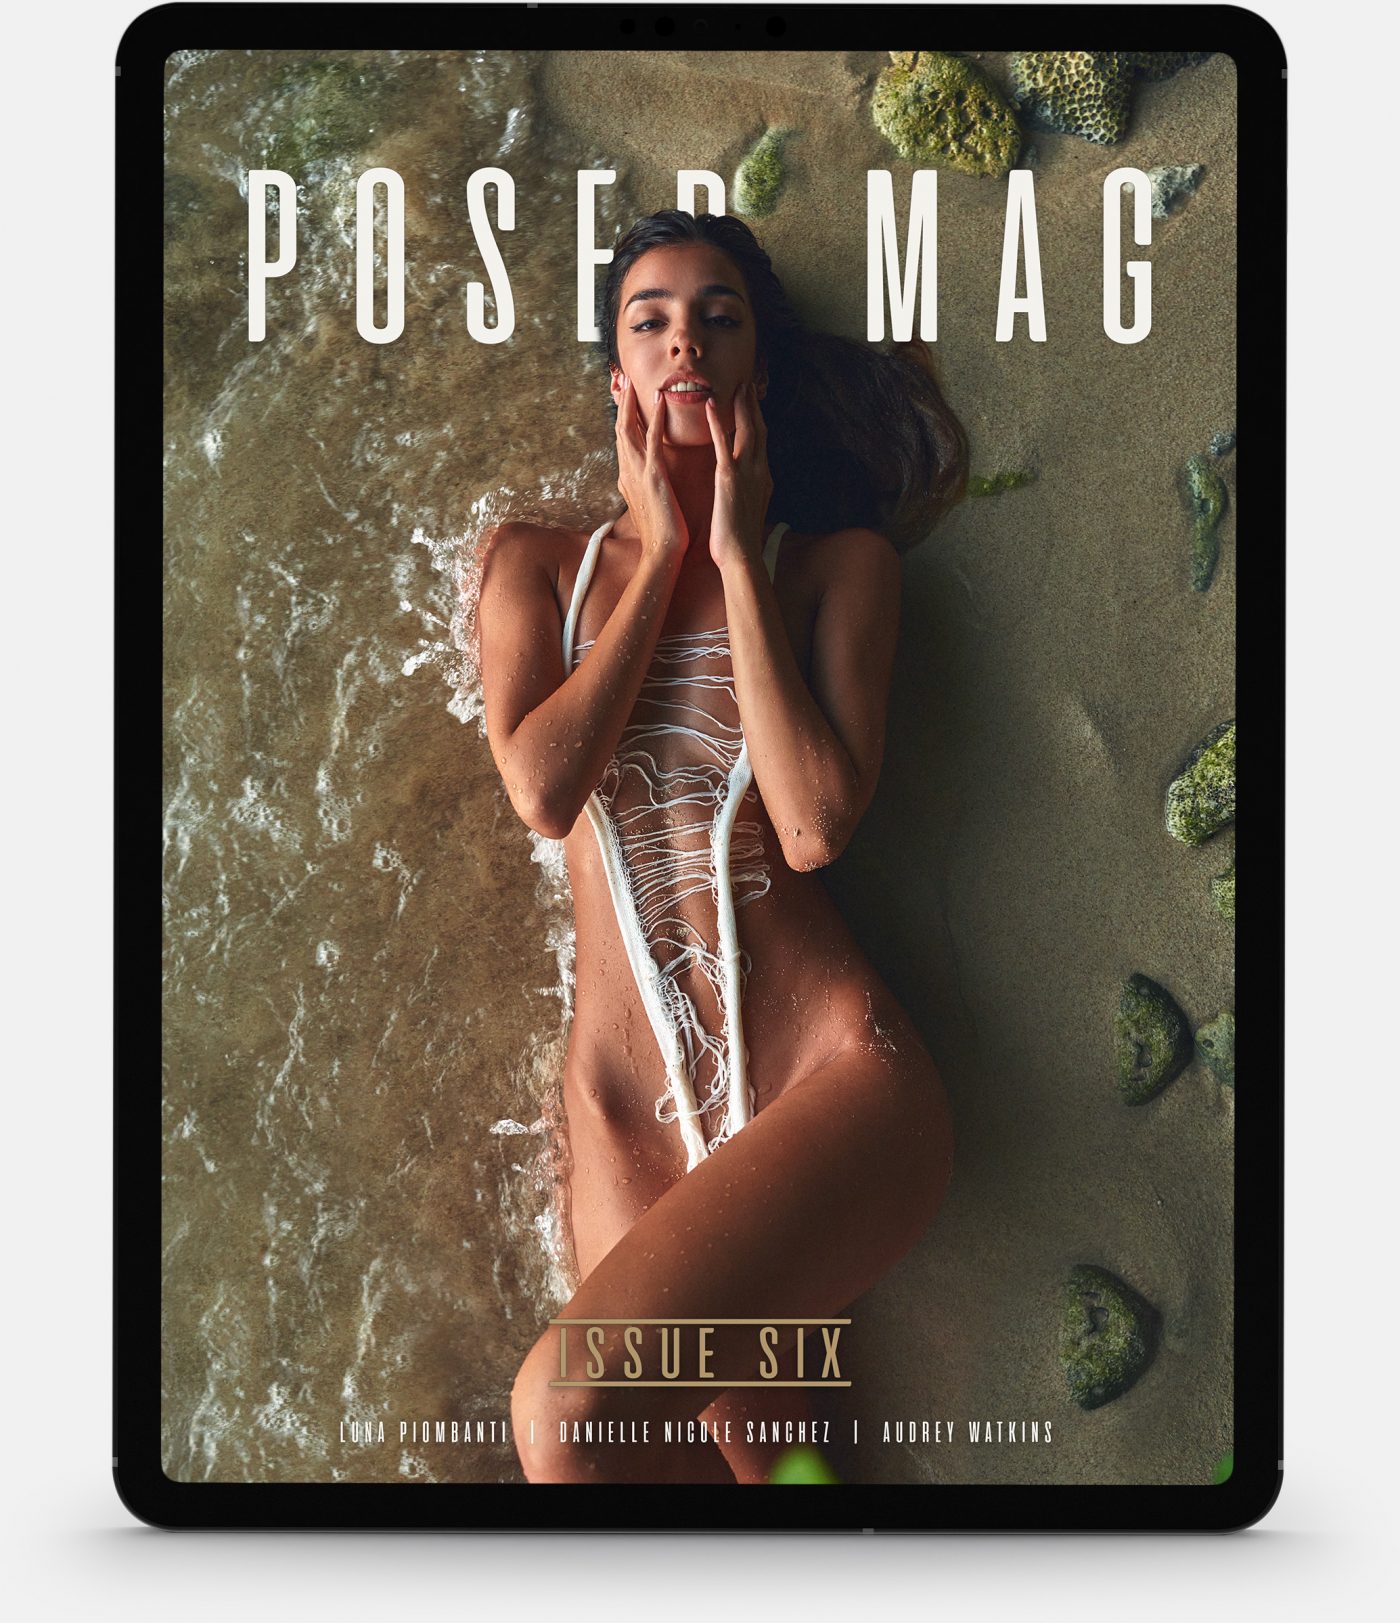 POSED MAG ISSUE 6 - Featuring Luna Piombanti, Danielle Nicole Sanchez, and Audrey Watkins